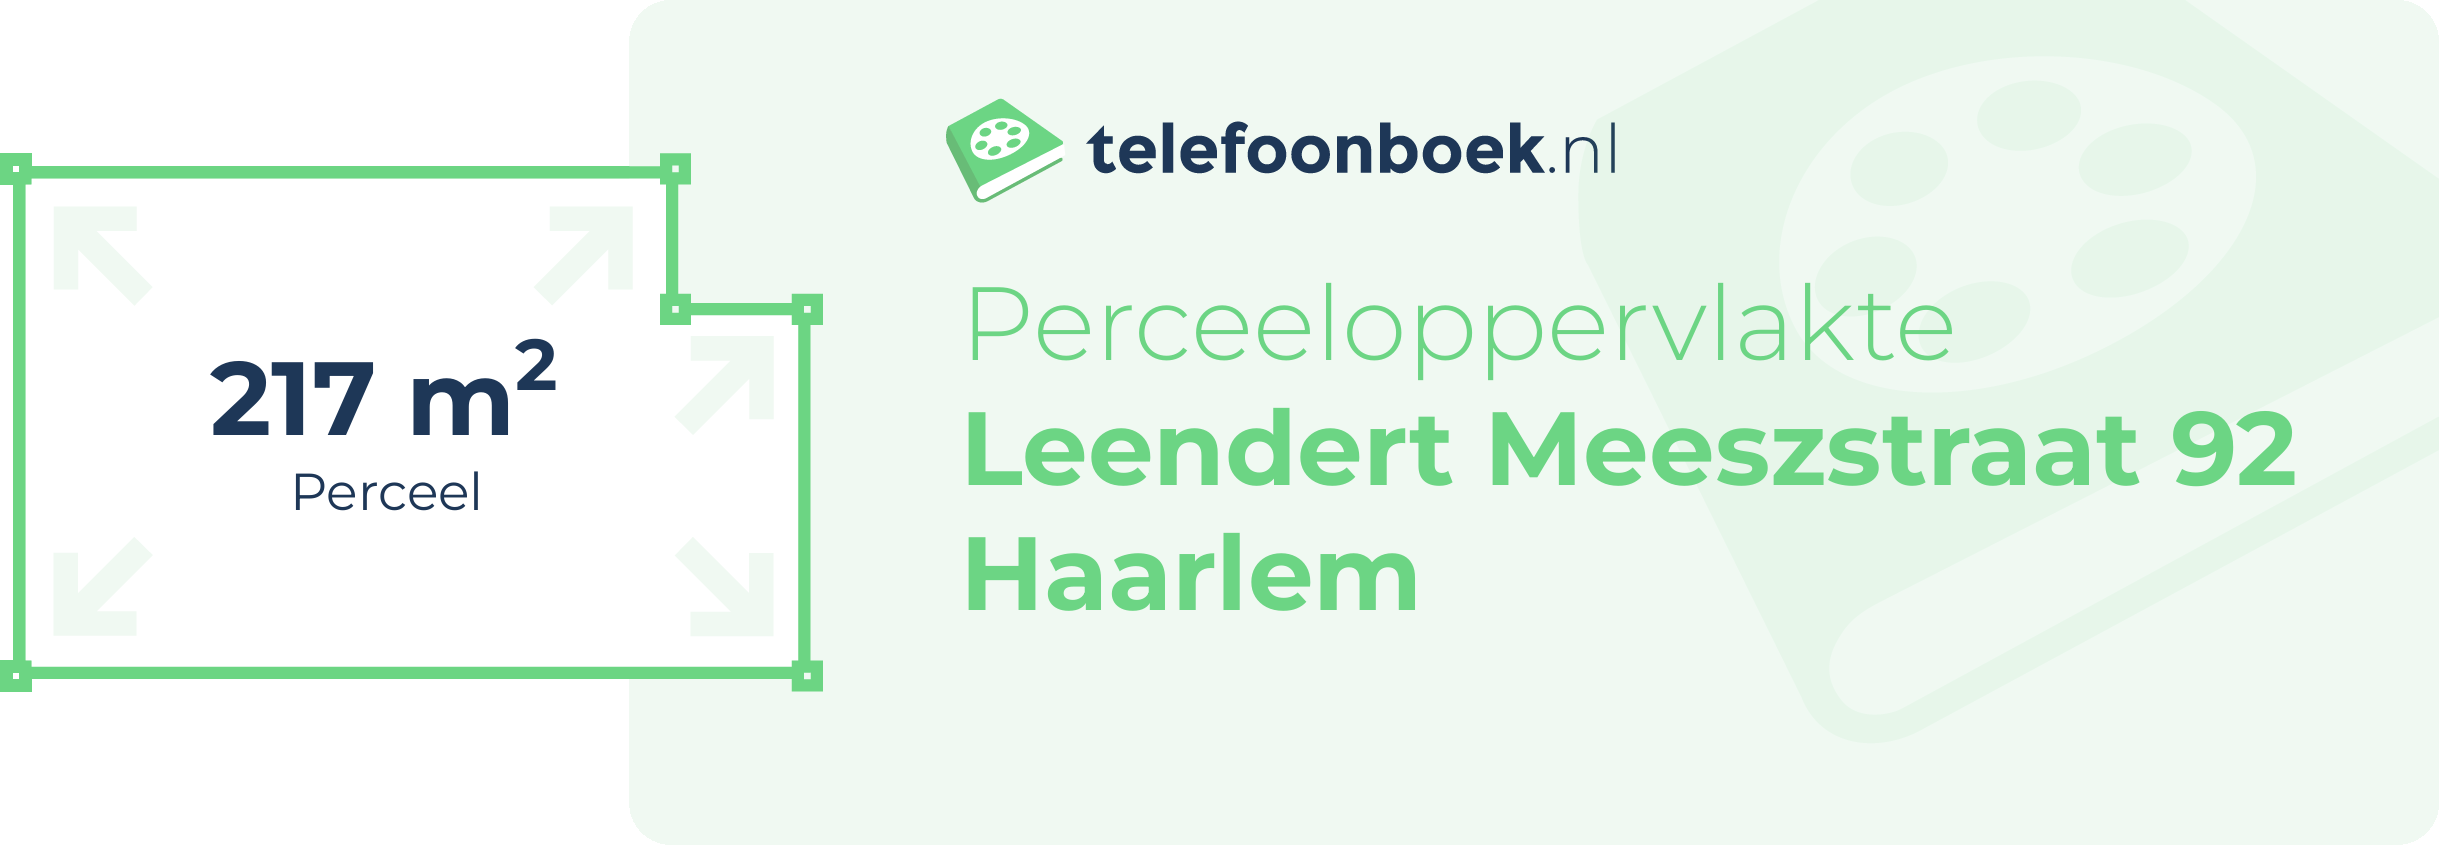 Perceeloppervlakte Leendert Meeszstraat 92 Haarlem